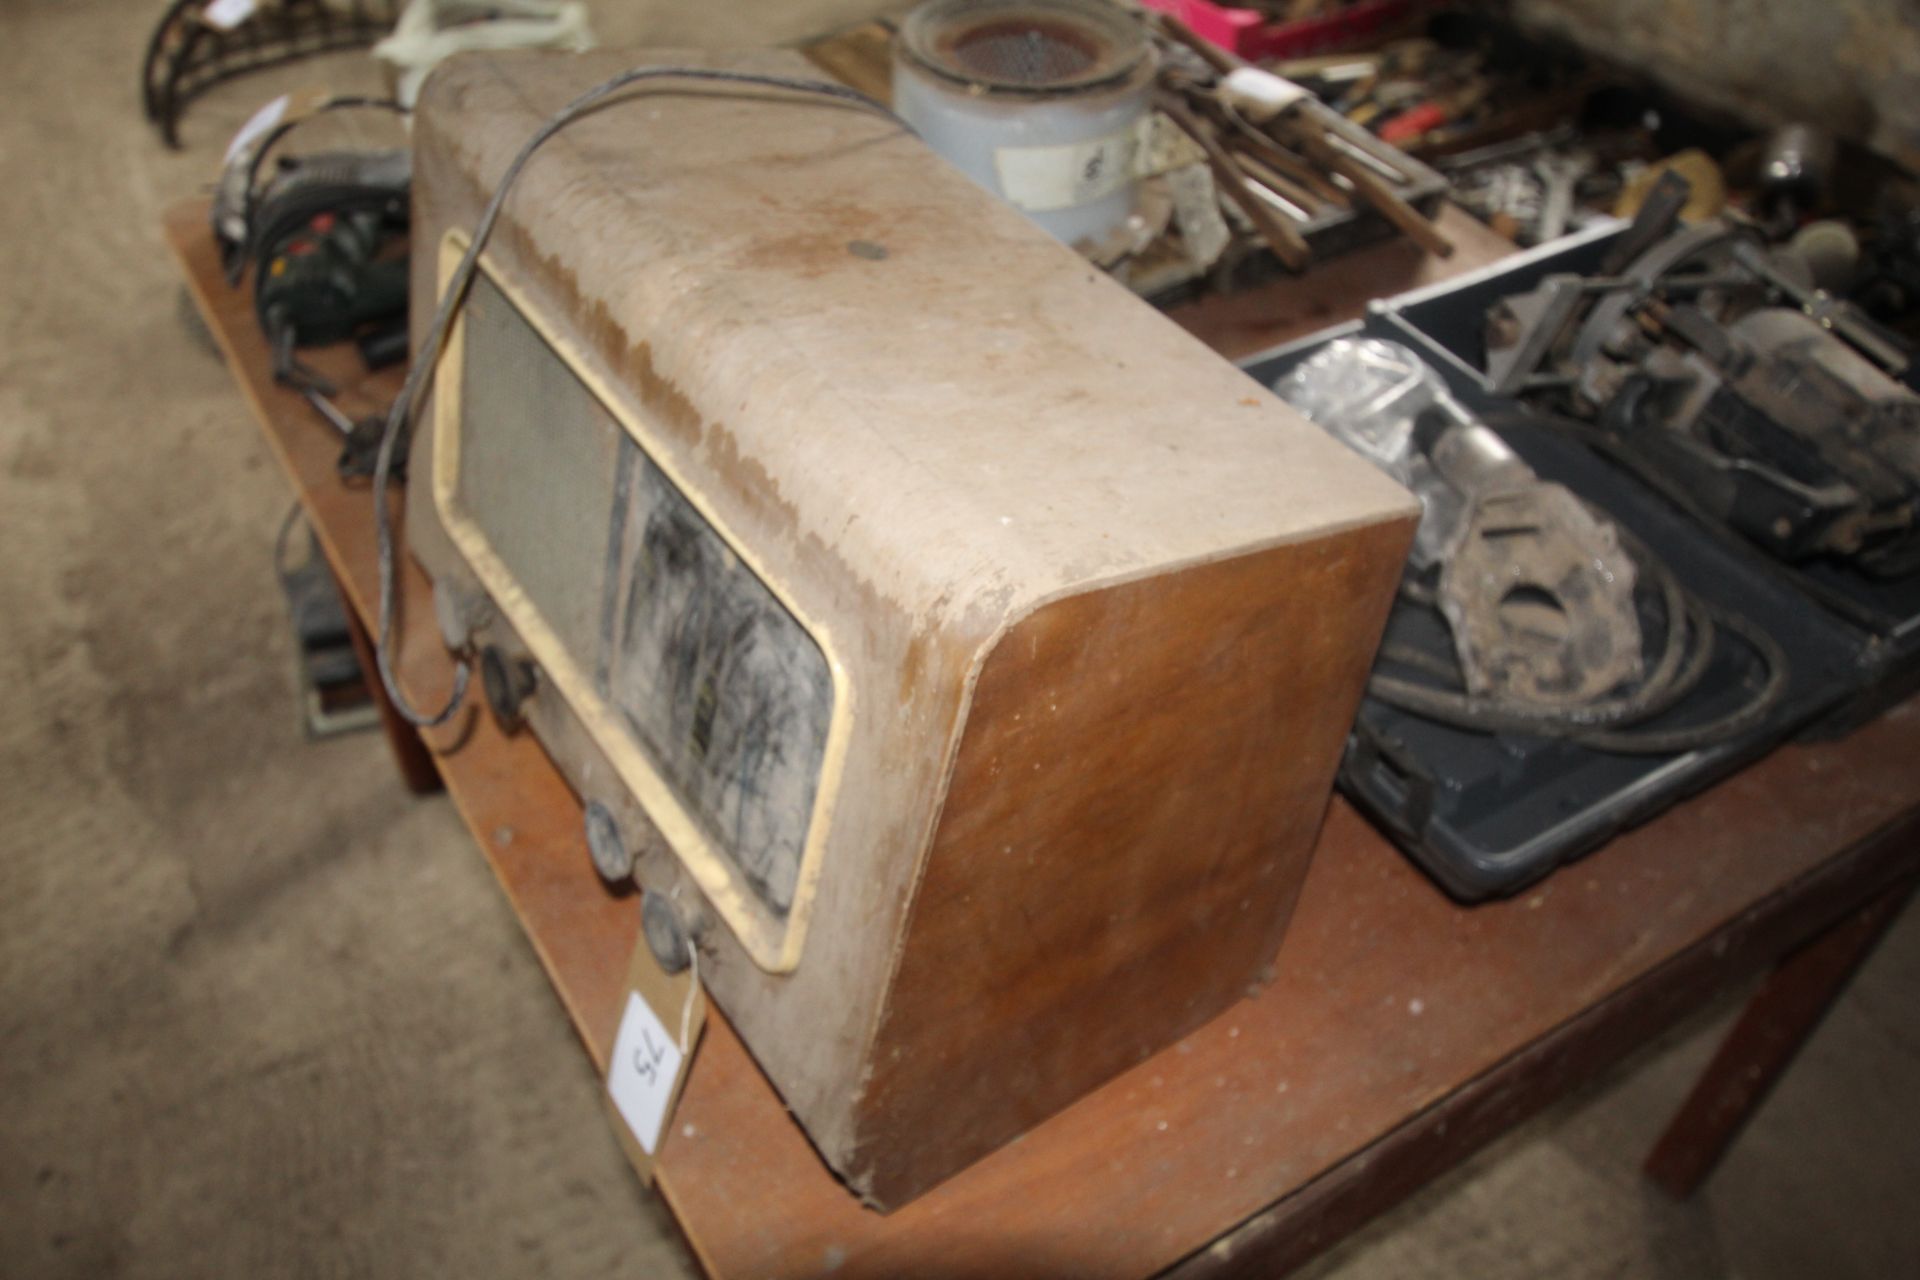 Pye vintage radio, sold as a collectors item. - Image 2 of 2